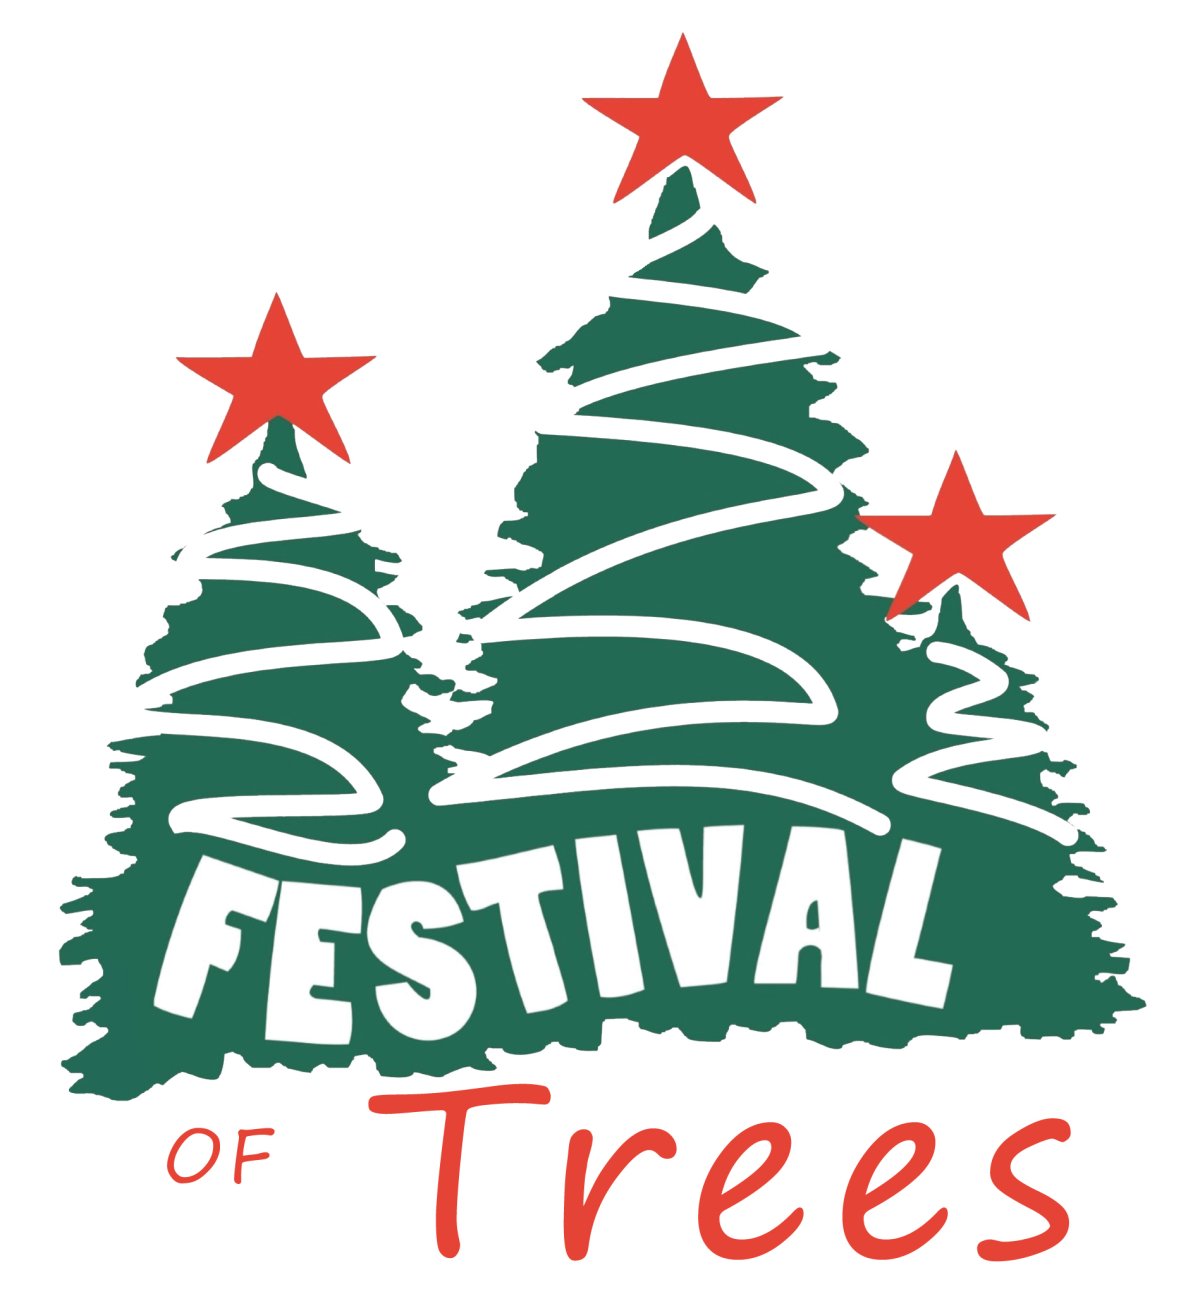 Red Deer Festival of Trees - image